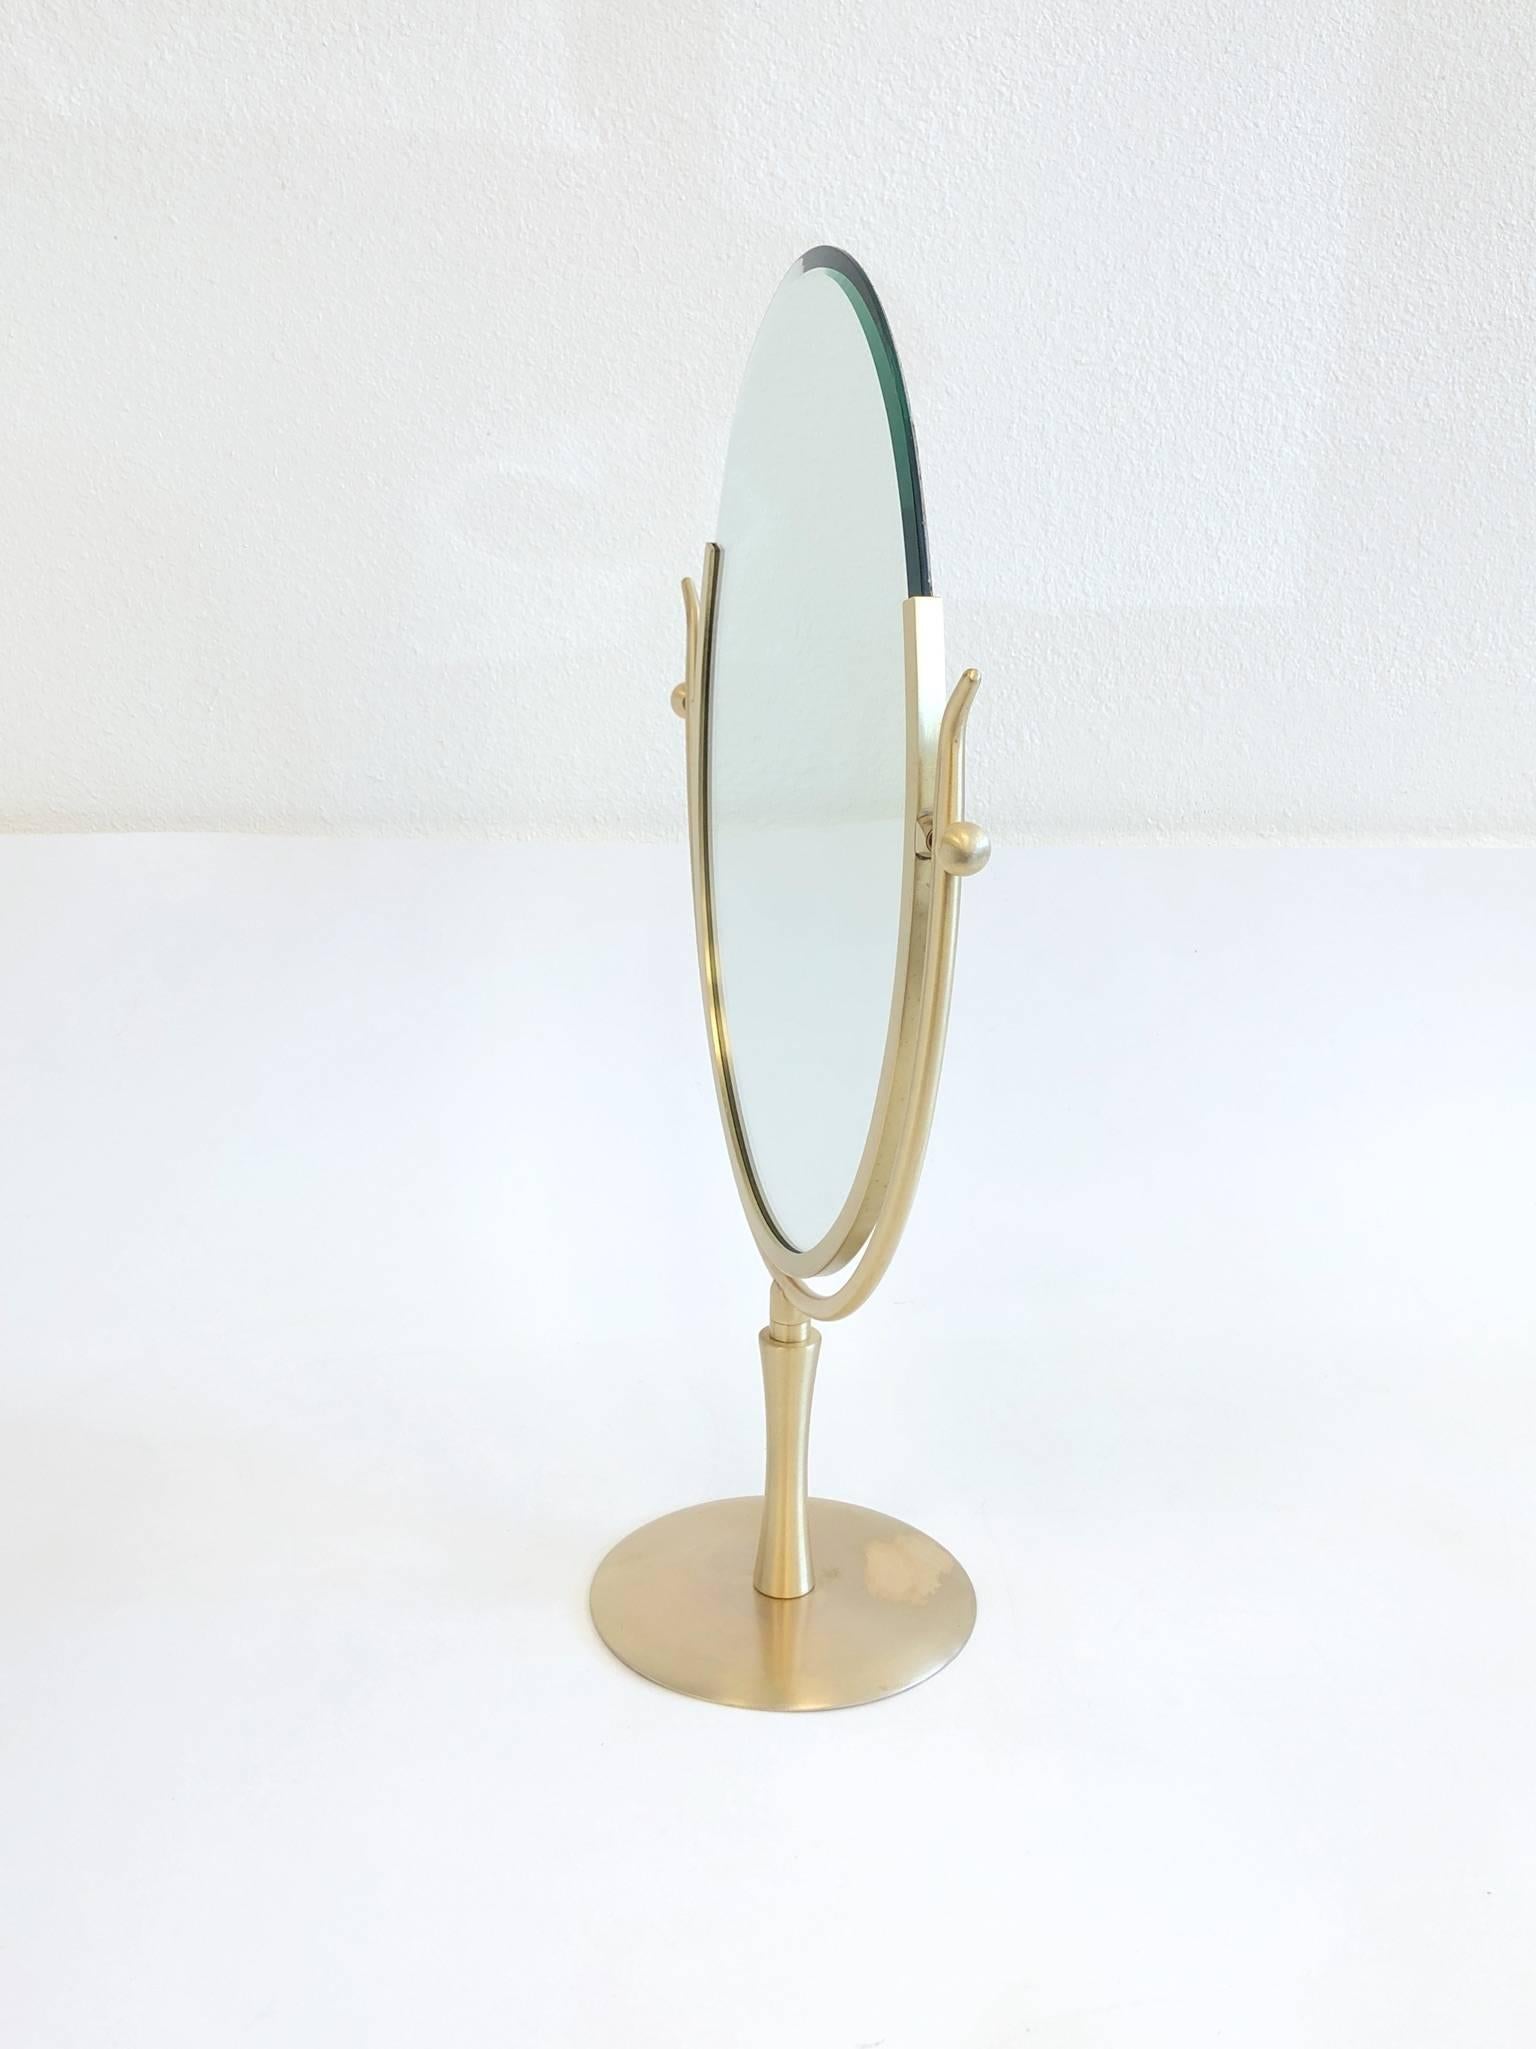 American Satin Brass and Leather Vanity Mirror by Charles Hollis Jones